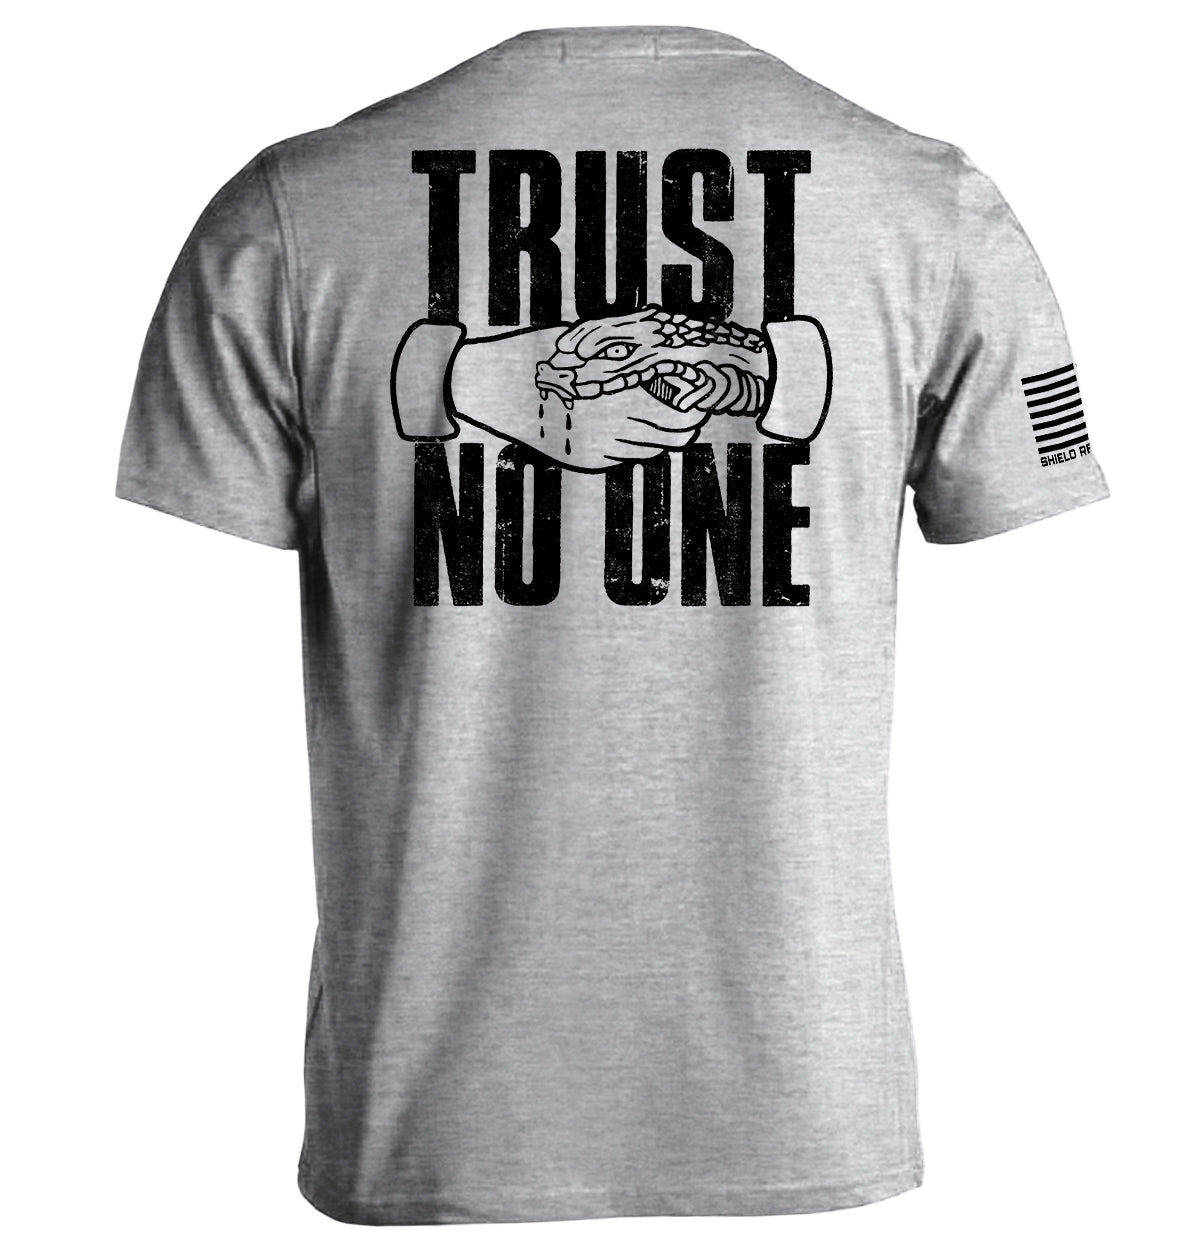 Trust No One (Black)